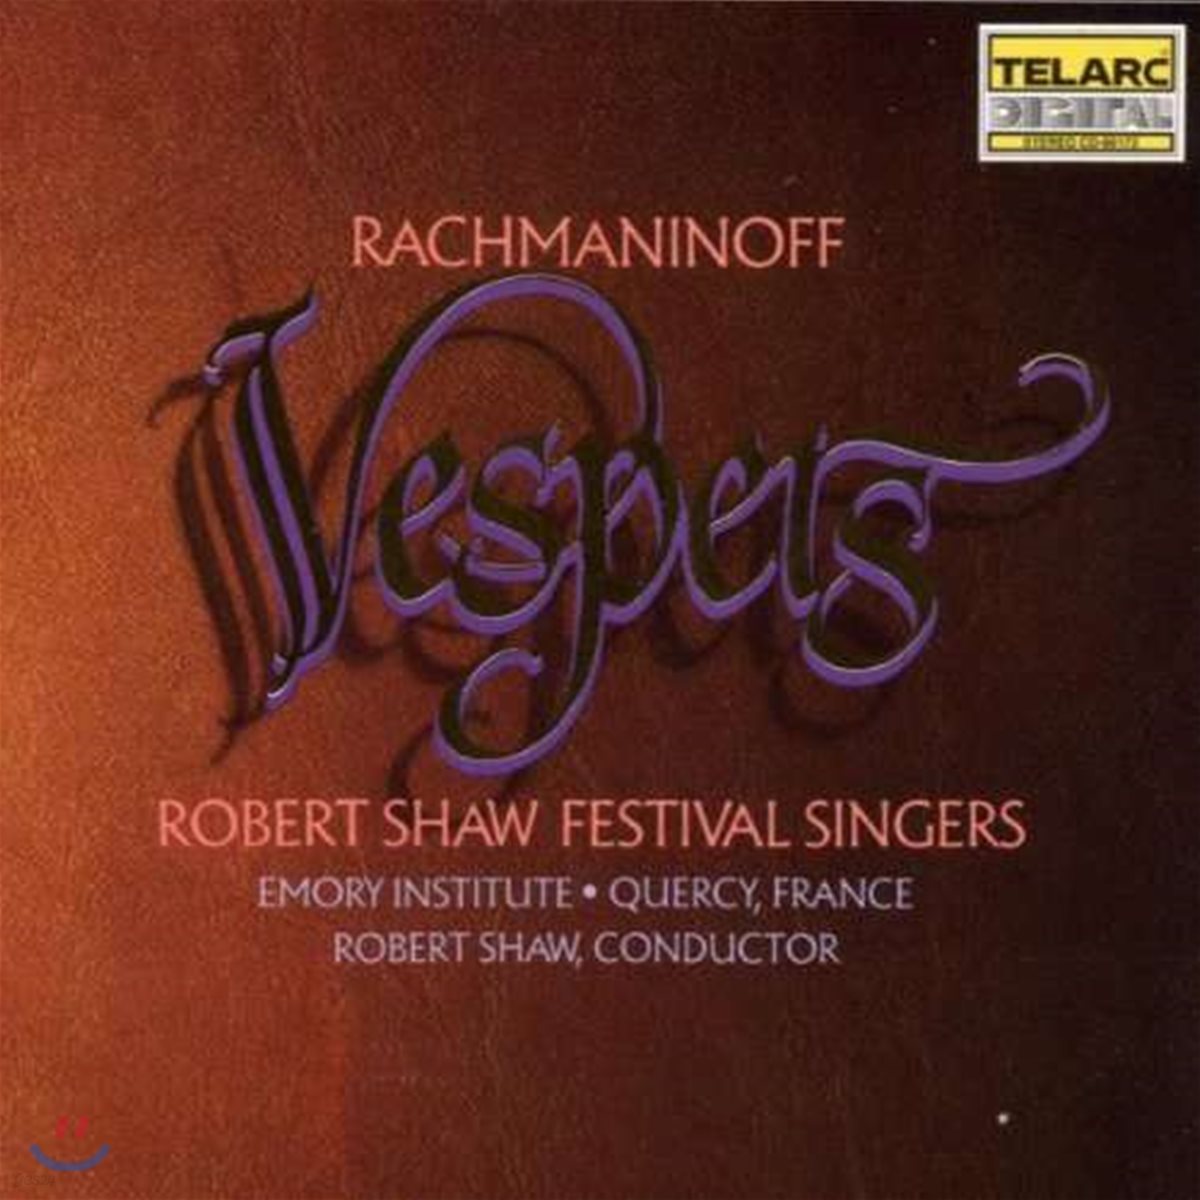 Robert Shaw Festival Singers 라흐마니노프: 저녁 기도 (Rachmaninov: Vespers Op.37)